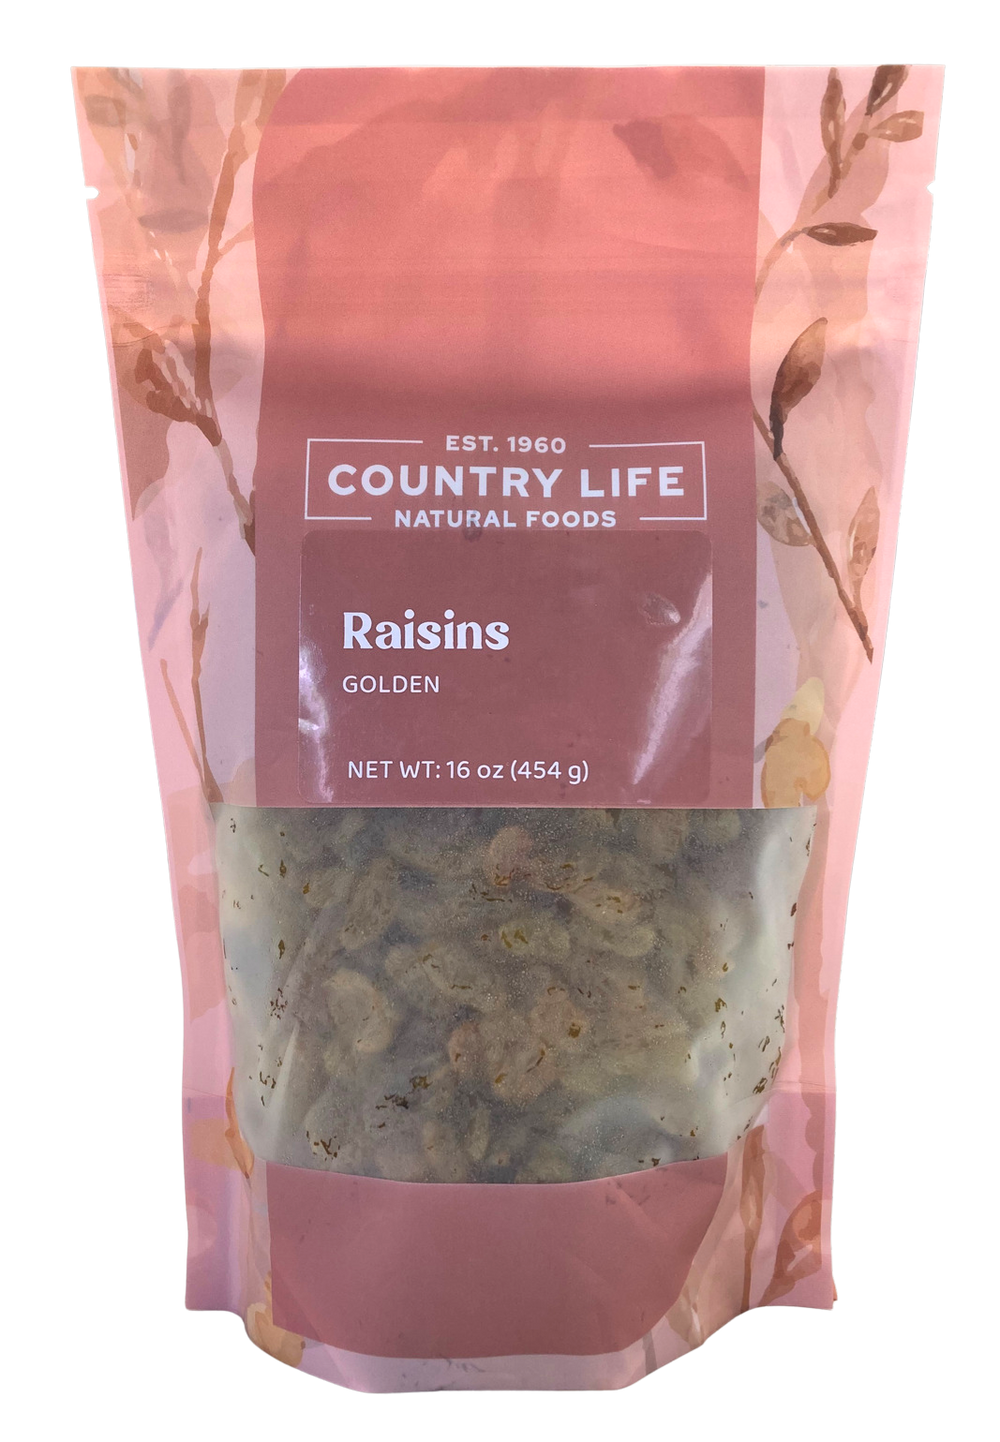 Raisins, Golden, Sulphured - Country Life Natural Foods